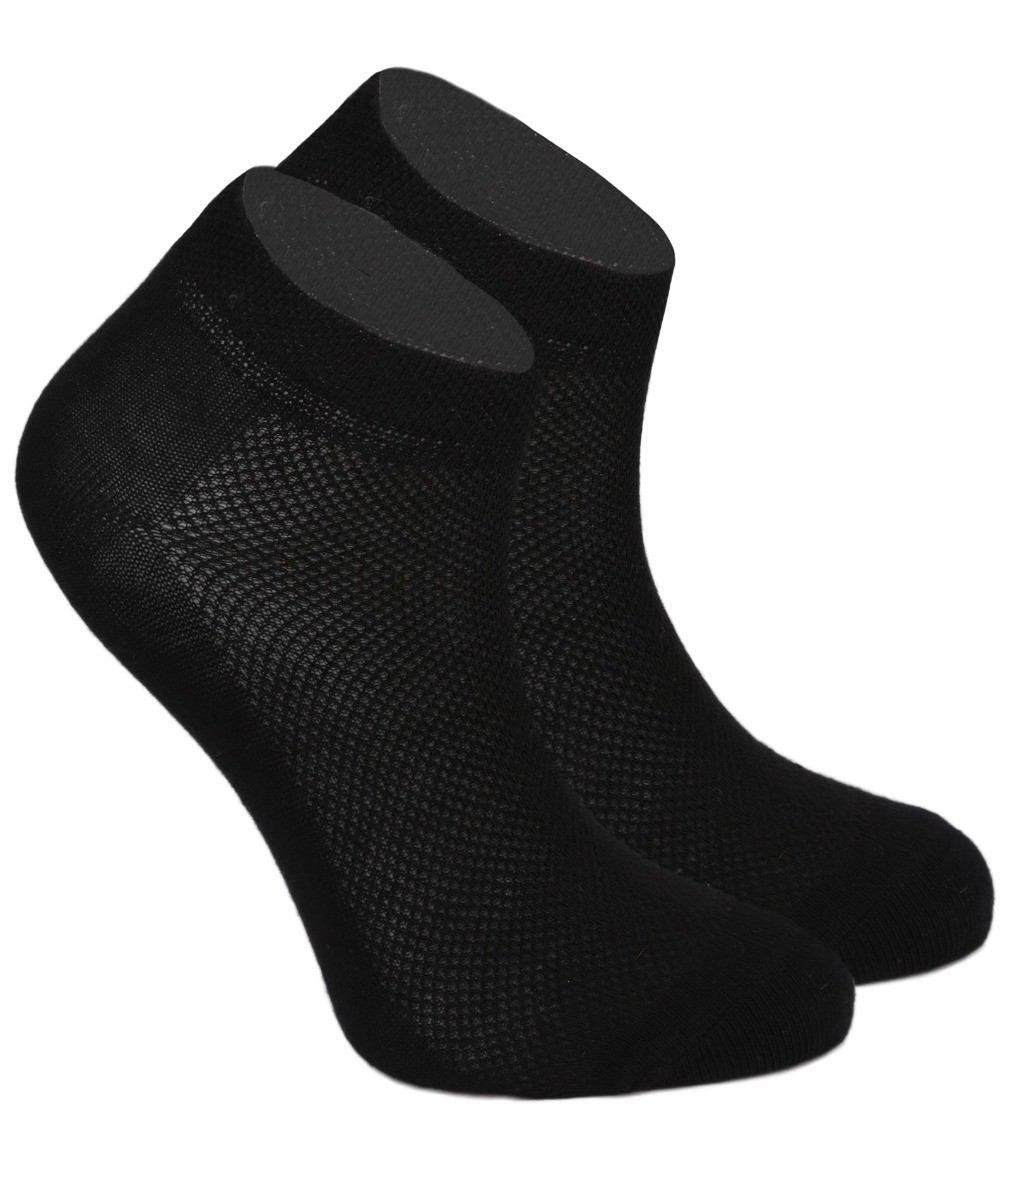 Unisex Stretch Cotton Ankle Socks, for Boys & Girls - Black